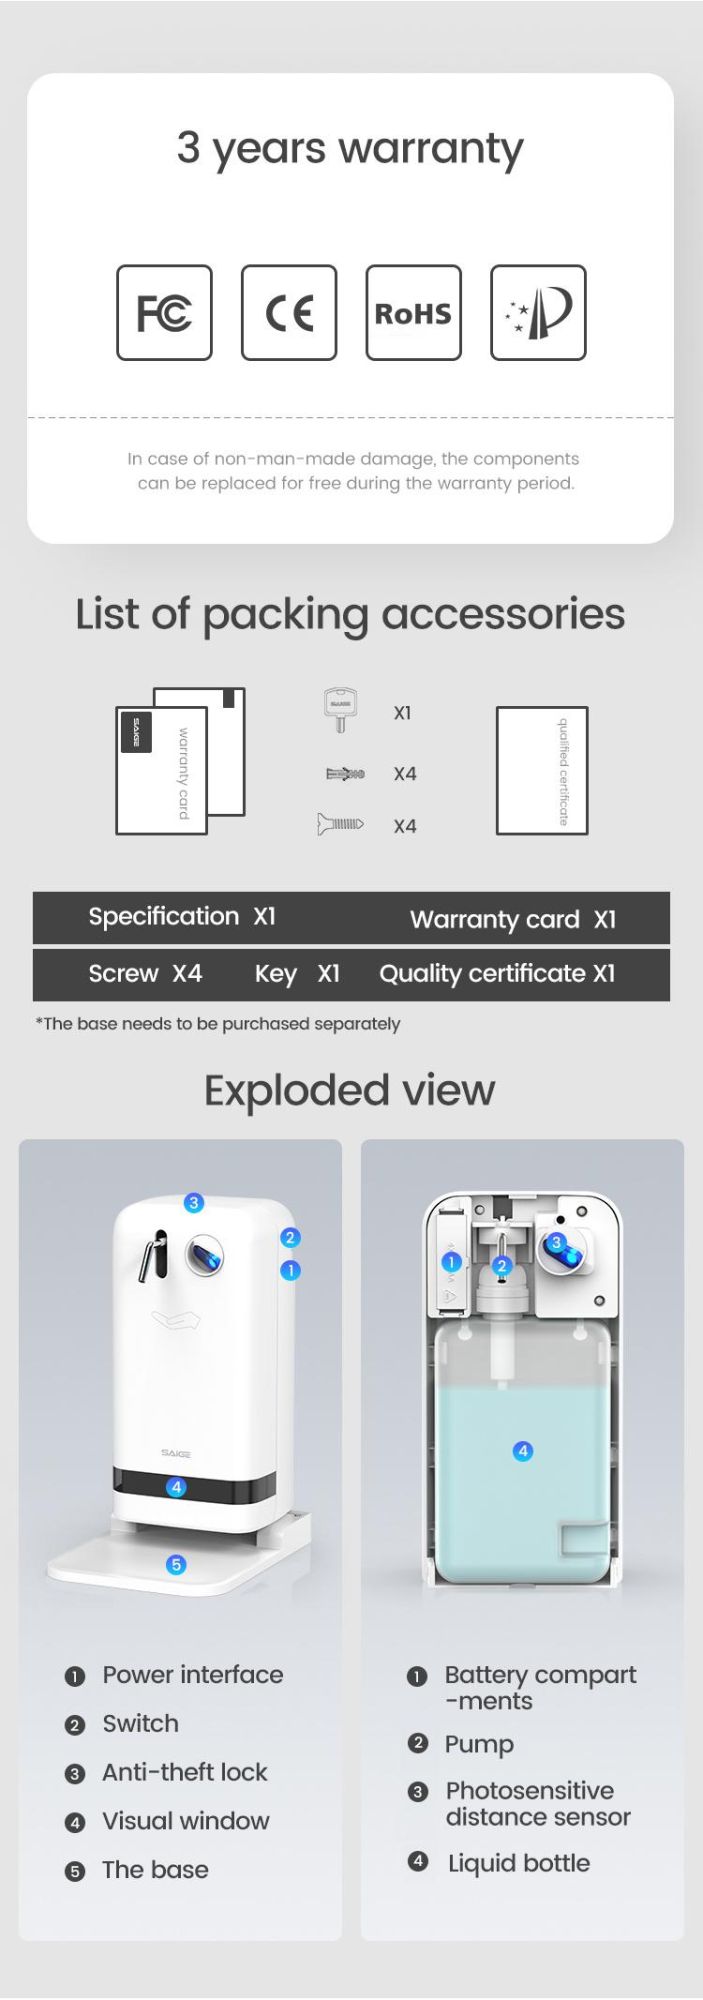 Saige High Quality 1800ml Wall Mounted Sensor Hand Sanitizer dispenser